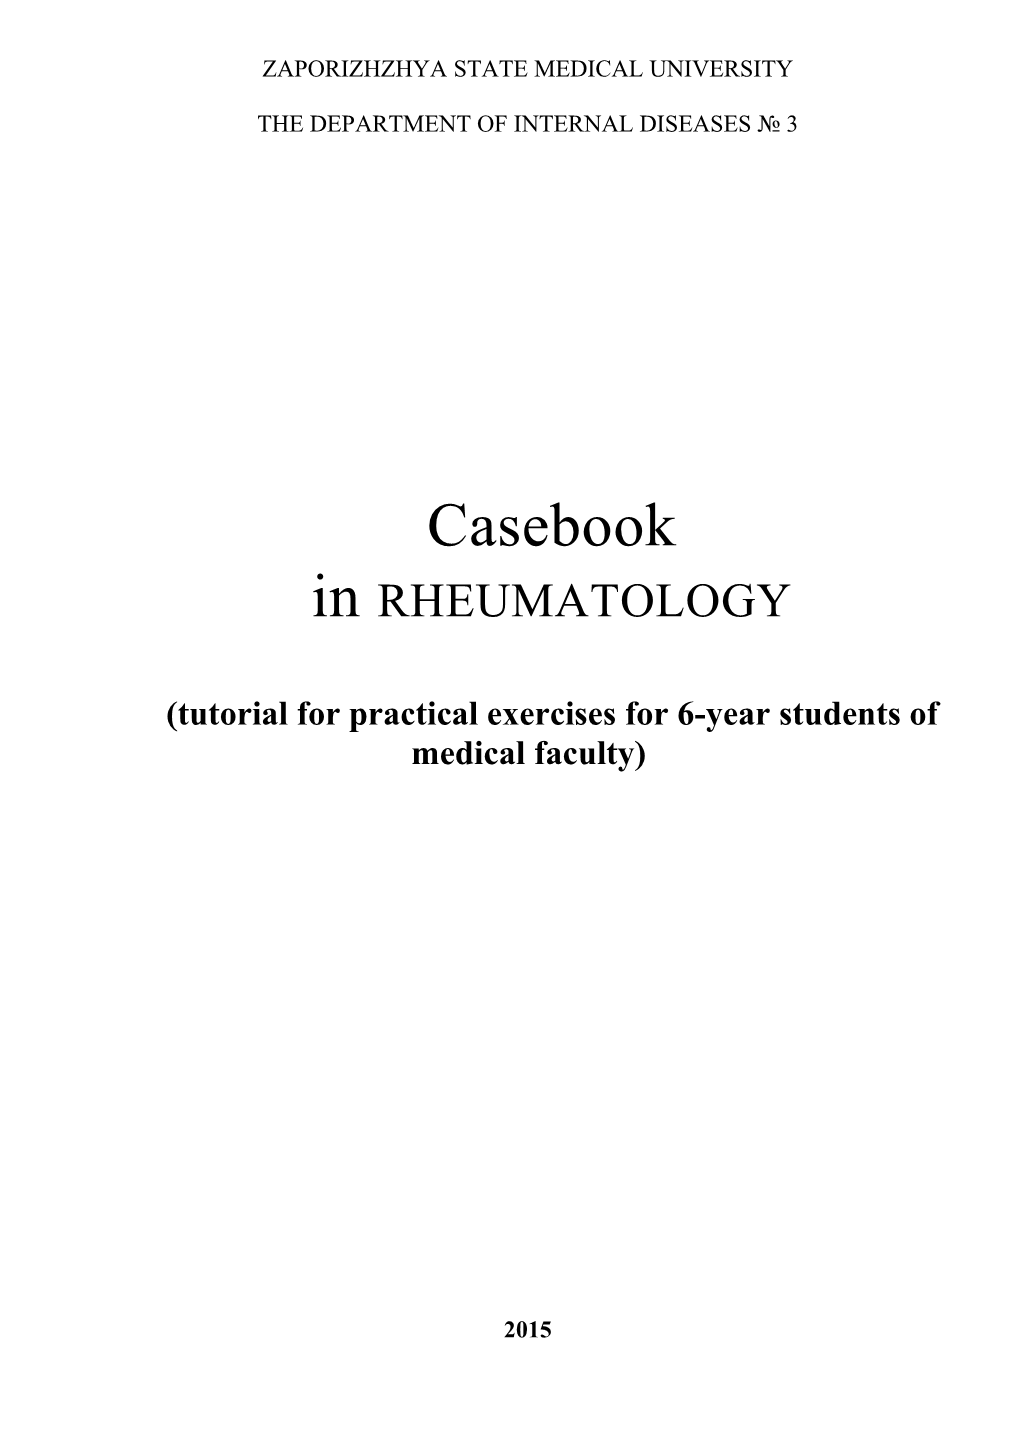 Casebook in RHEUMATOLOGY